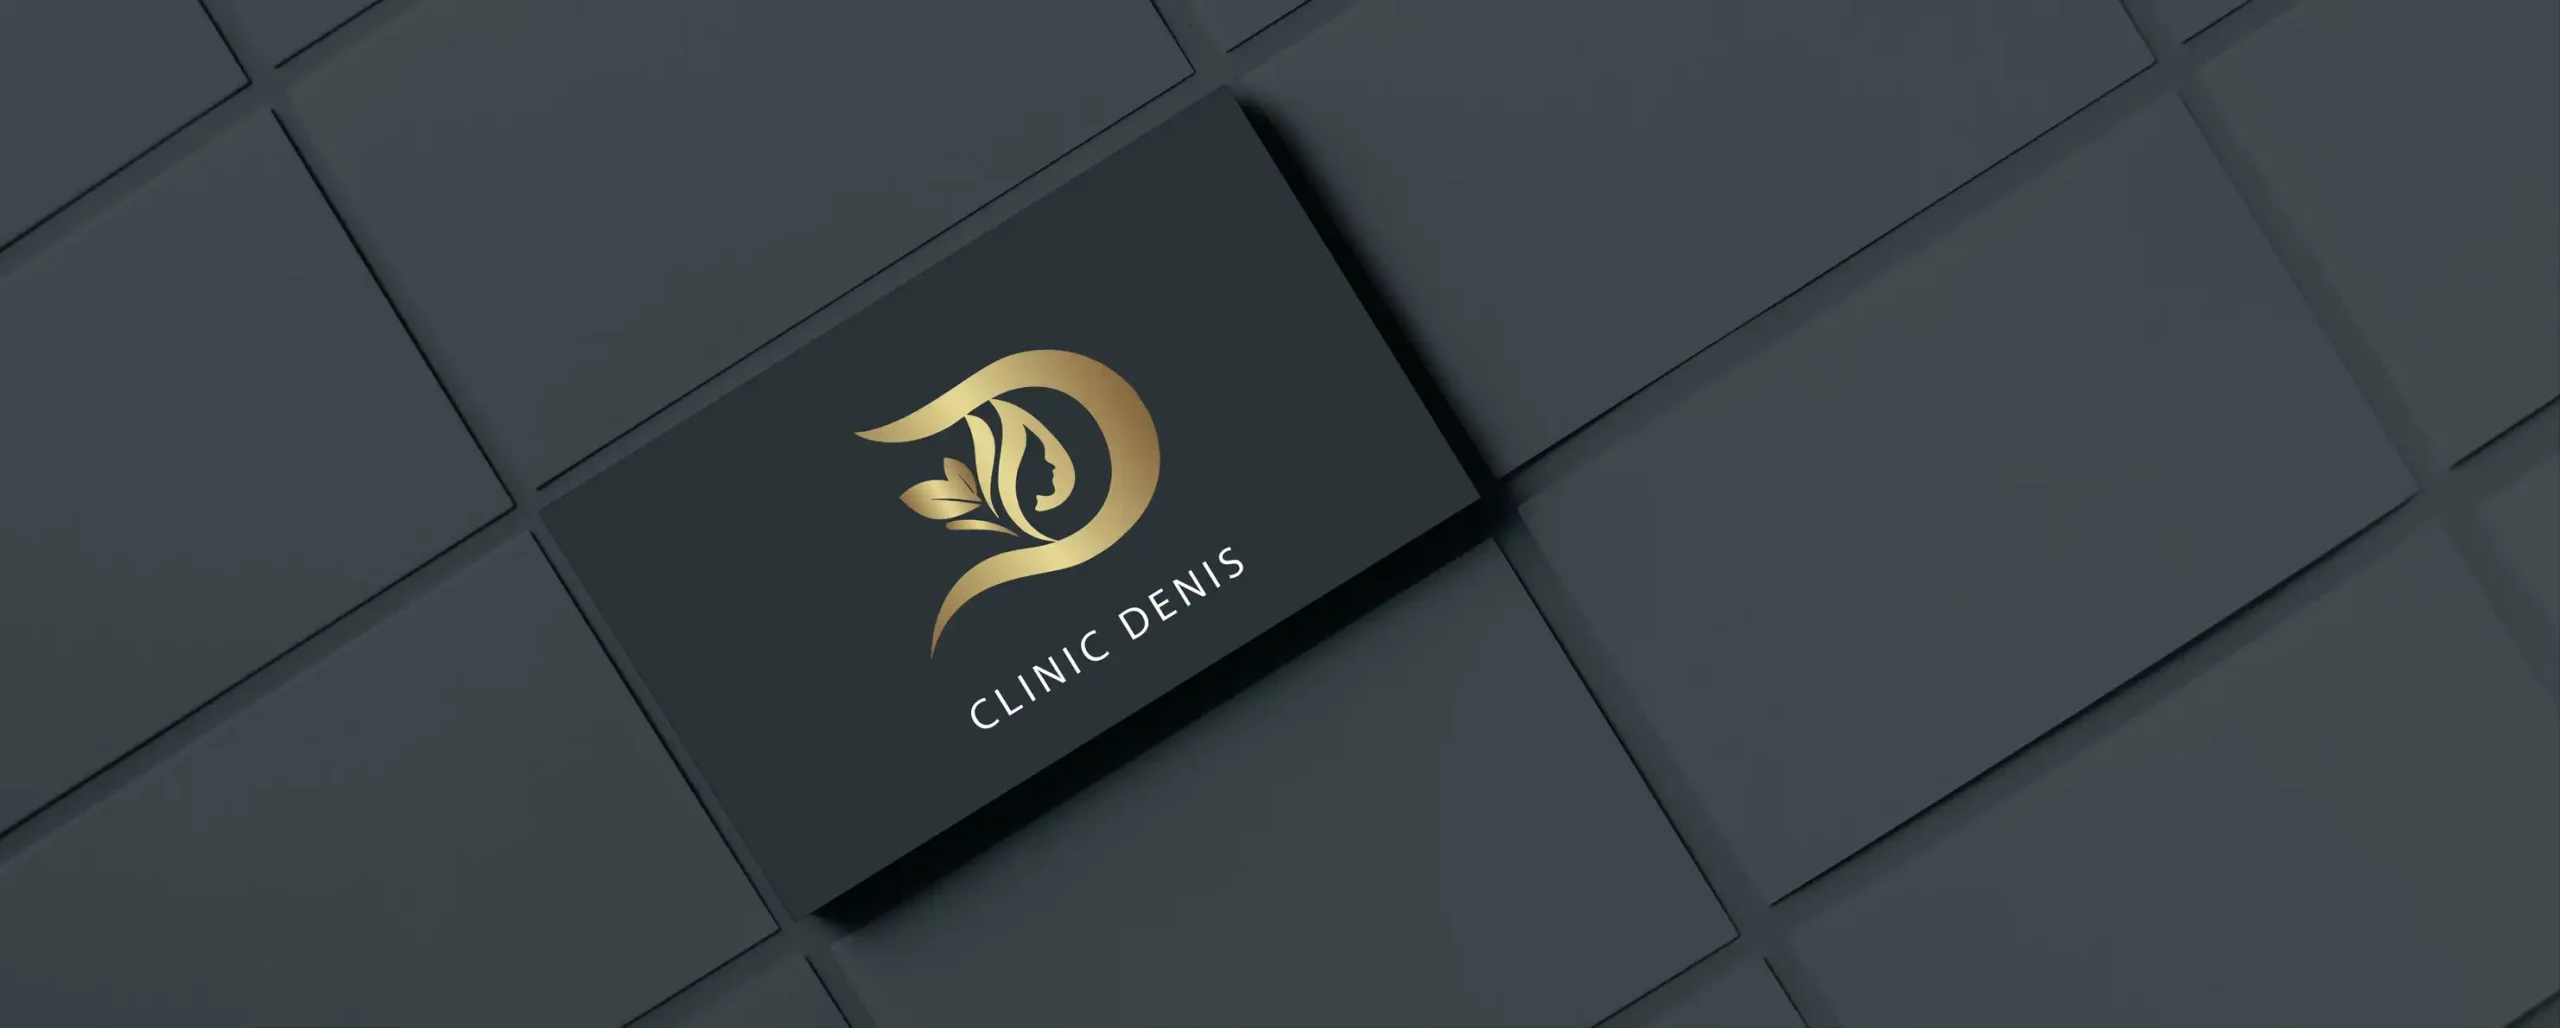 best clinic denis